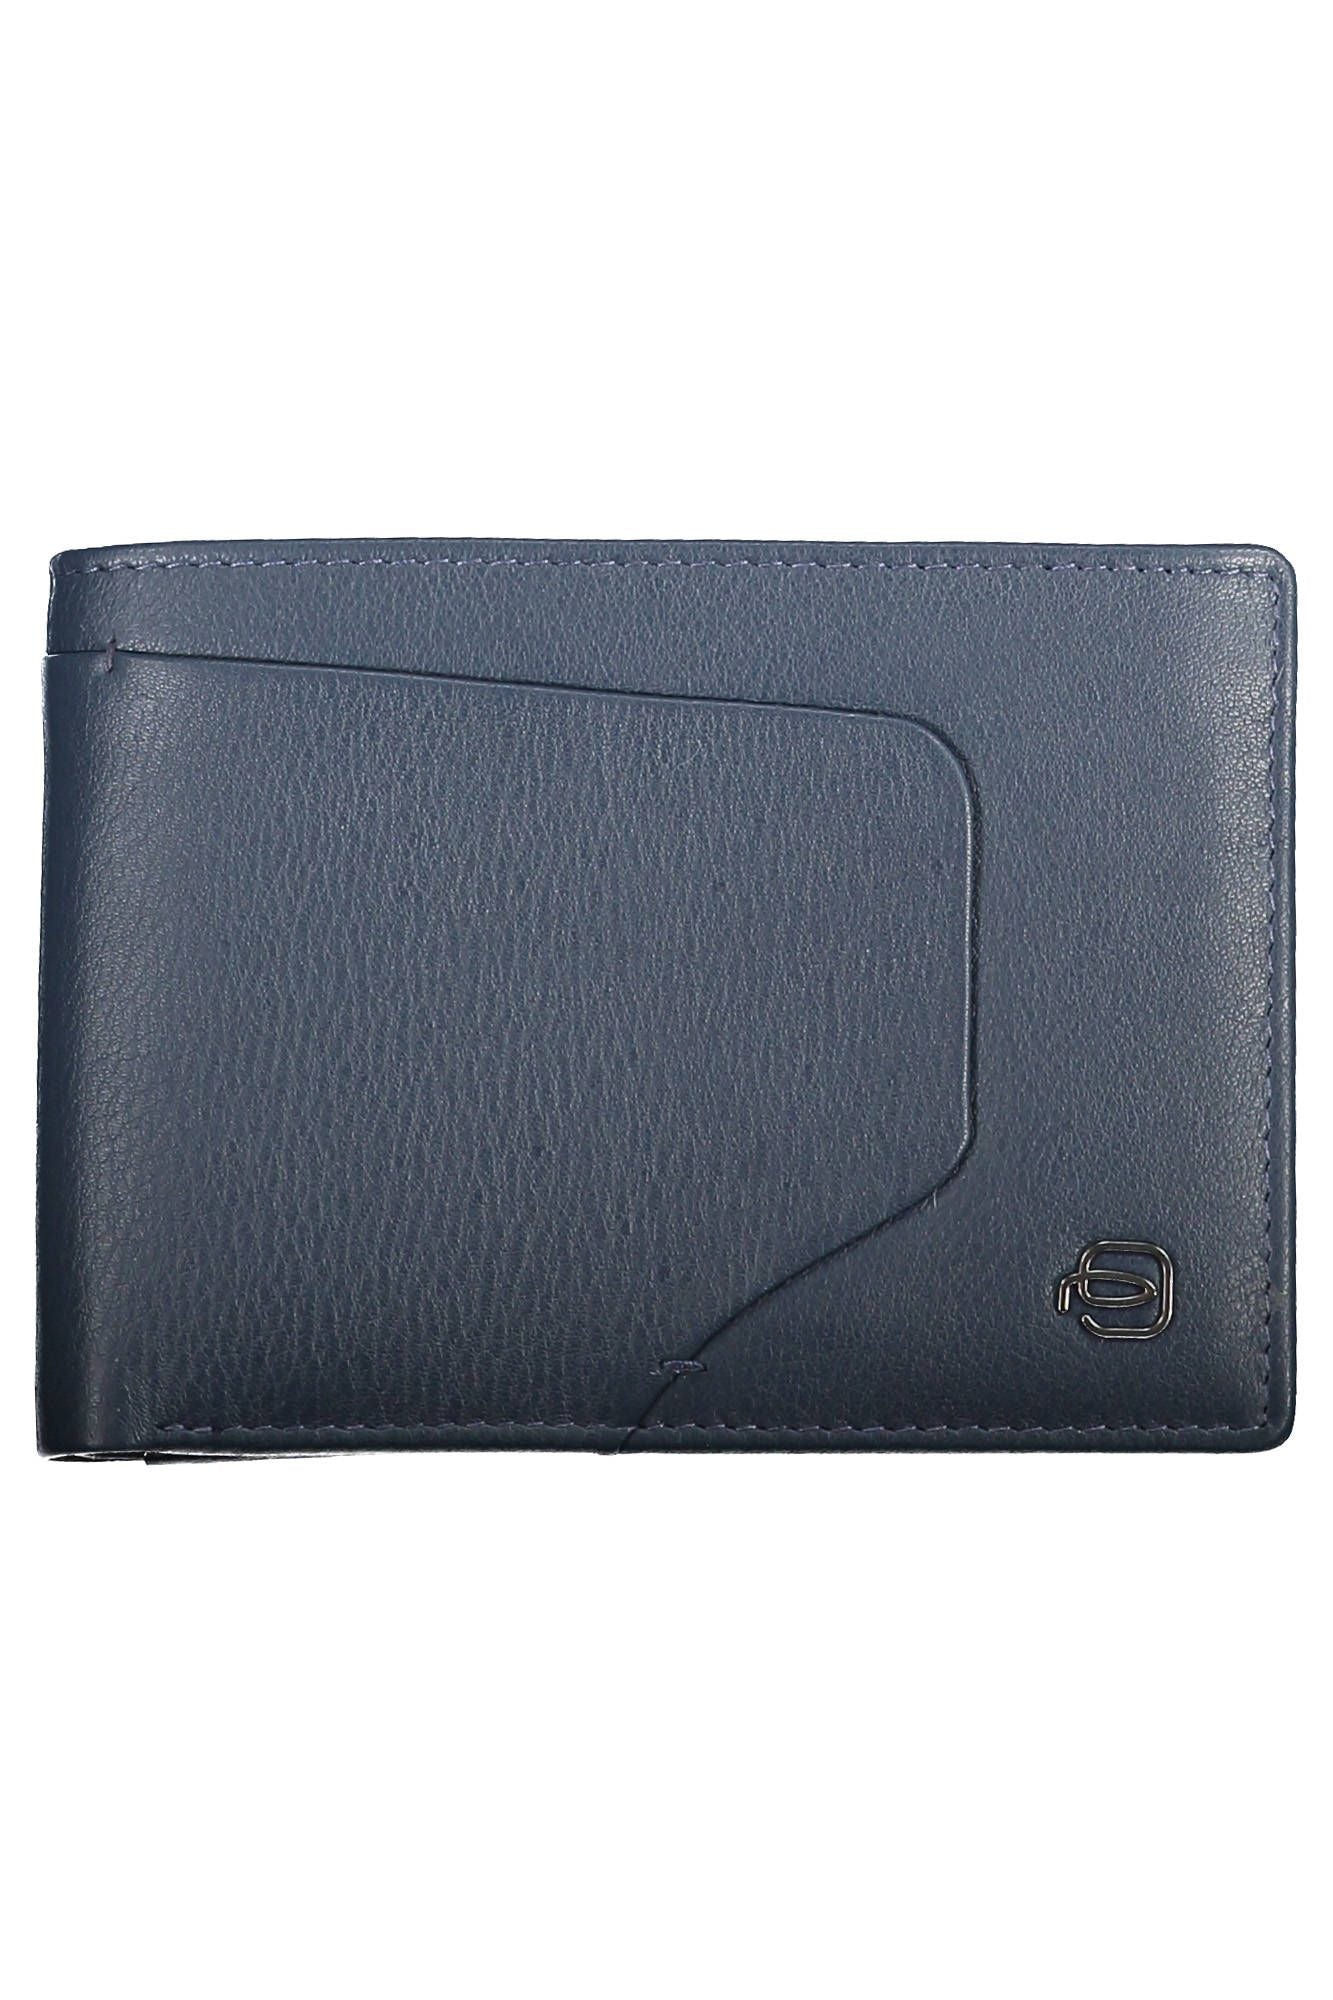 Elegant Blue Leather Bifold Wallet with RFID Blocker